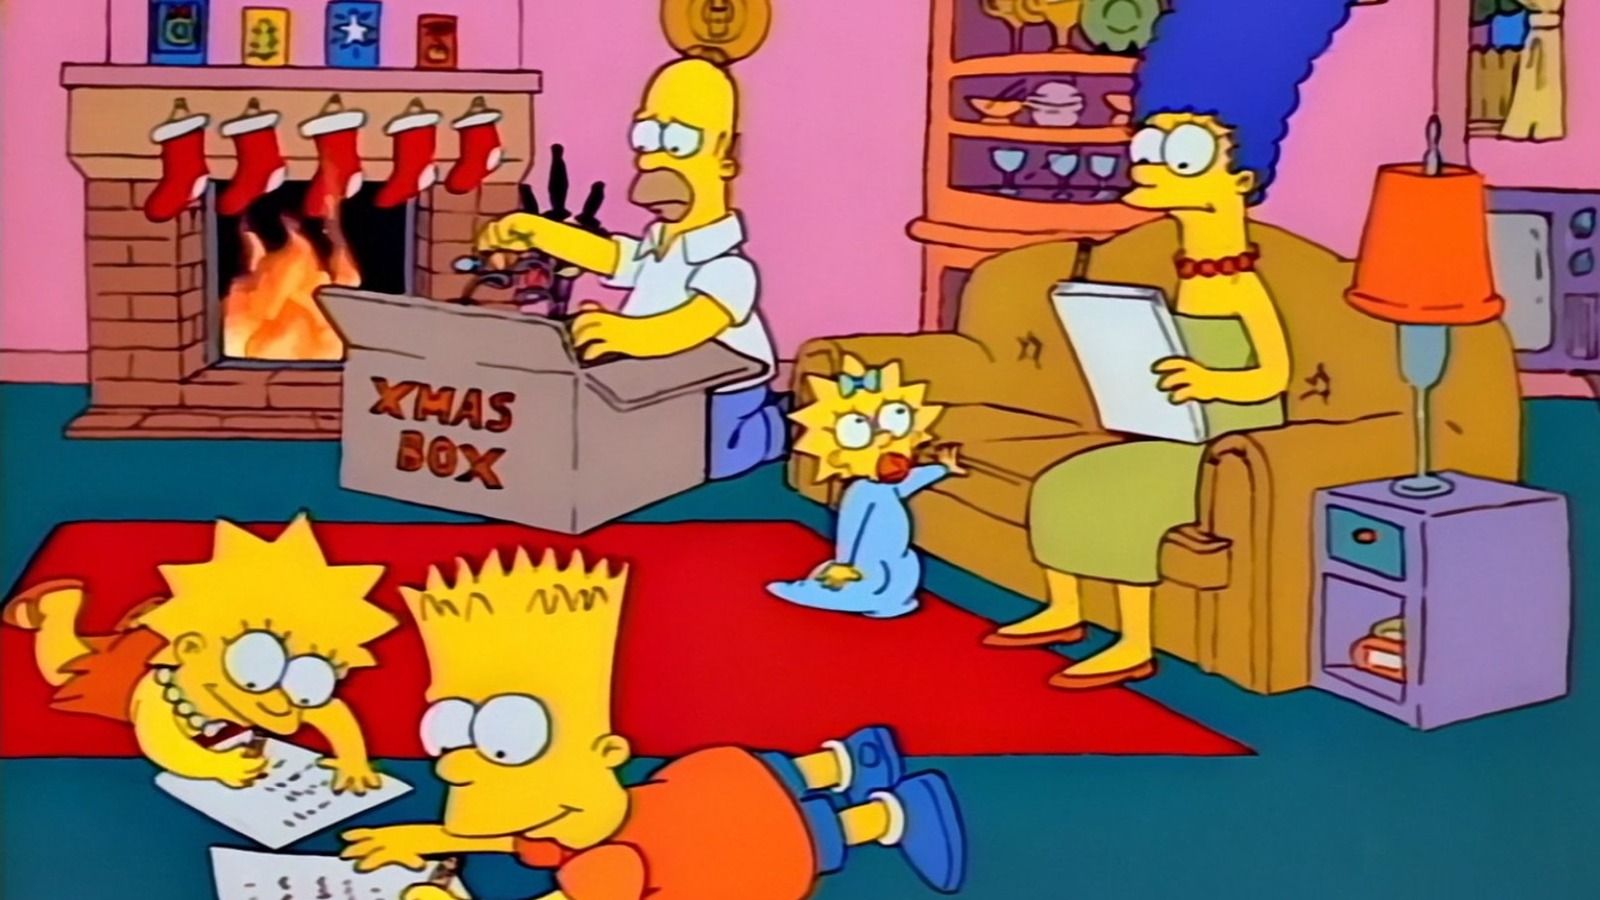 Was The Simpsons Matt Groening’s Last-Minute Plan-B Pitch To Fox?